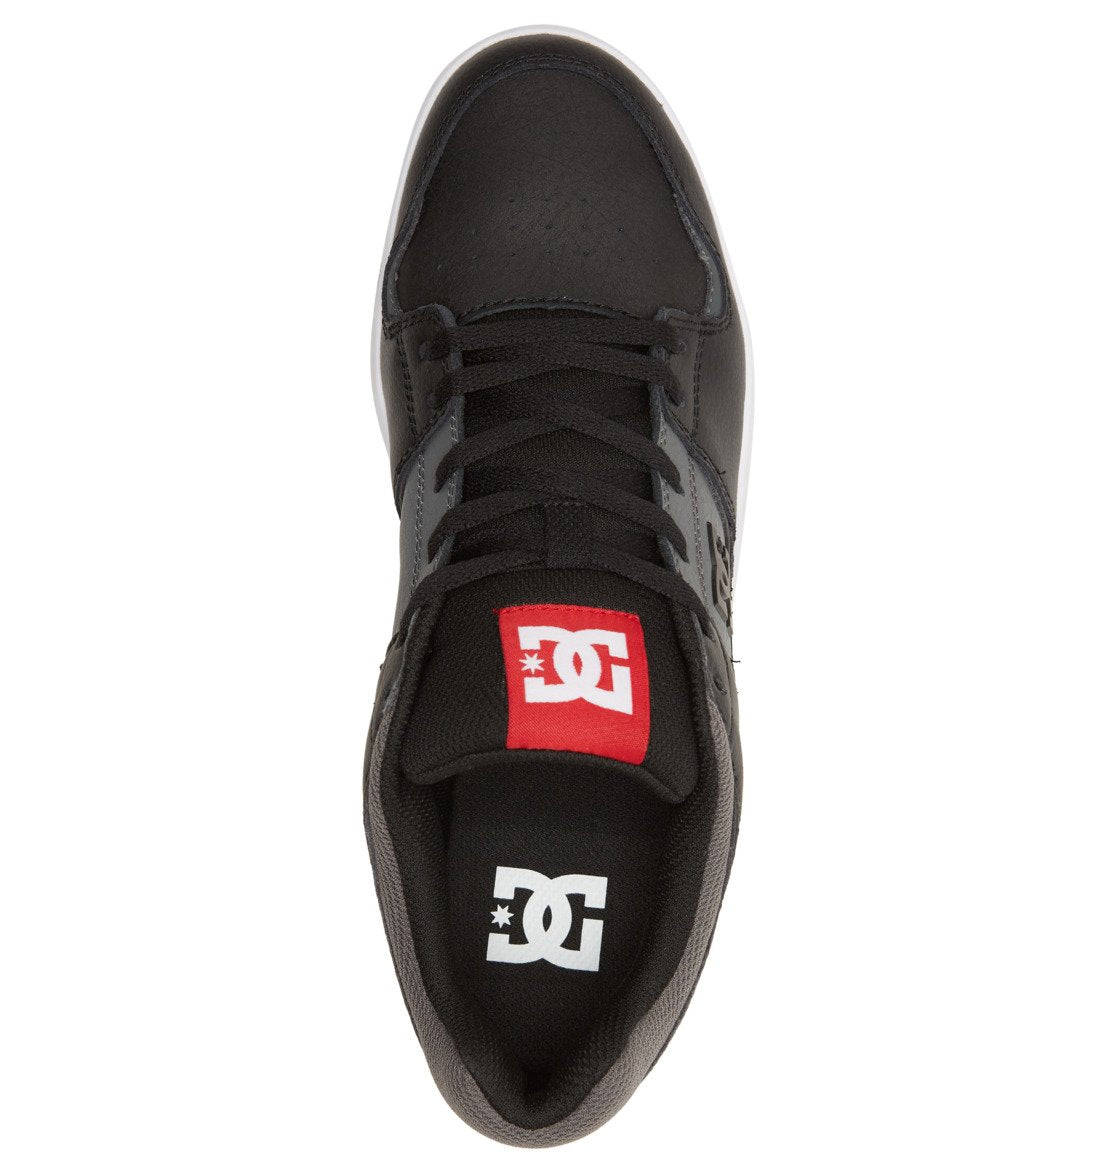 Dc Shoes Cure Black/grey | surfdevils.com